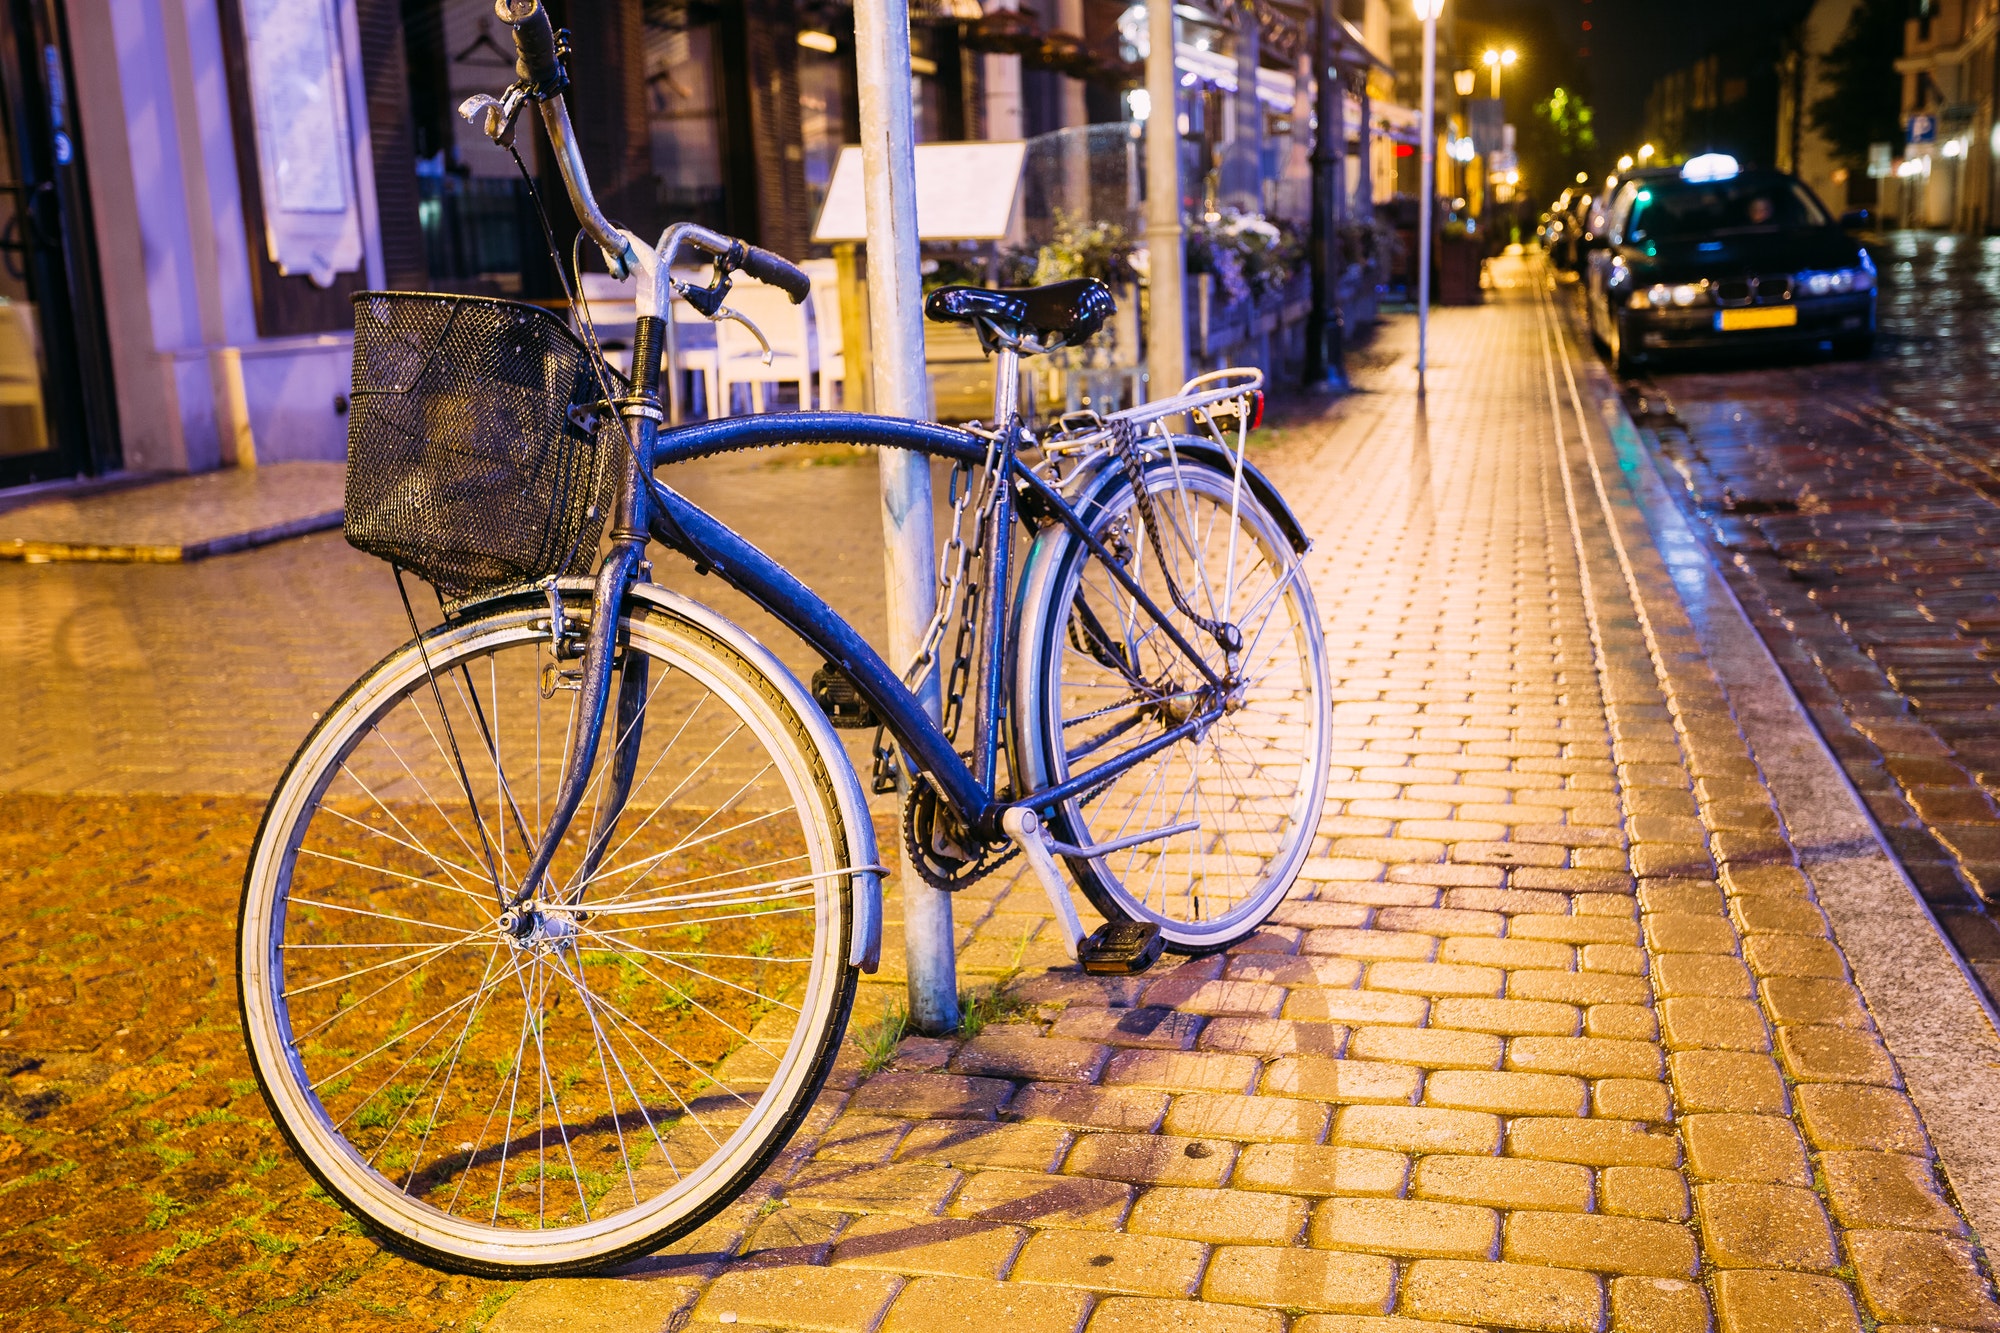 Bicycle Bike Parking On Street In Old Part European Town In Summ